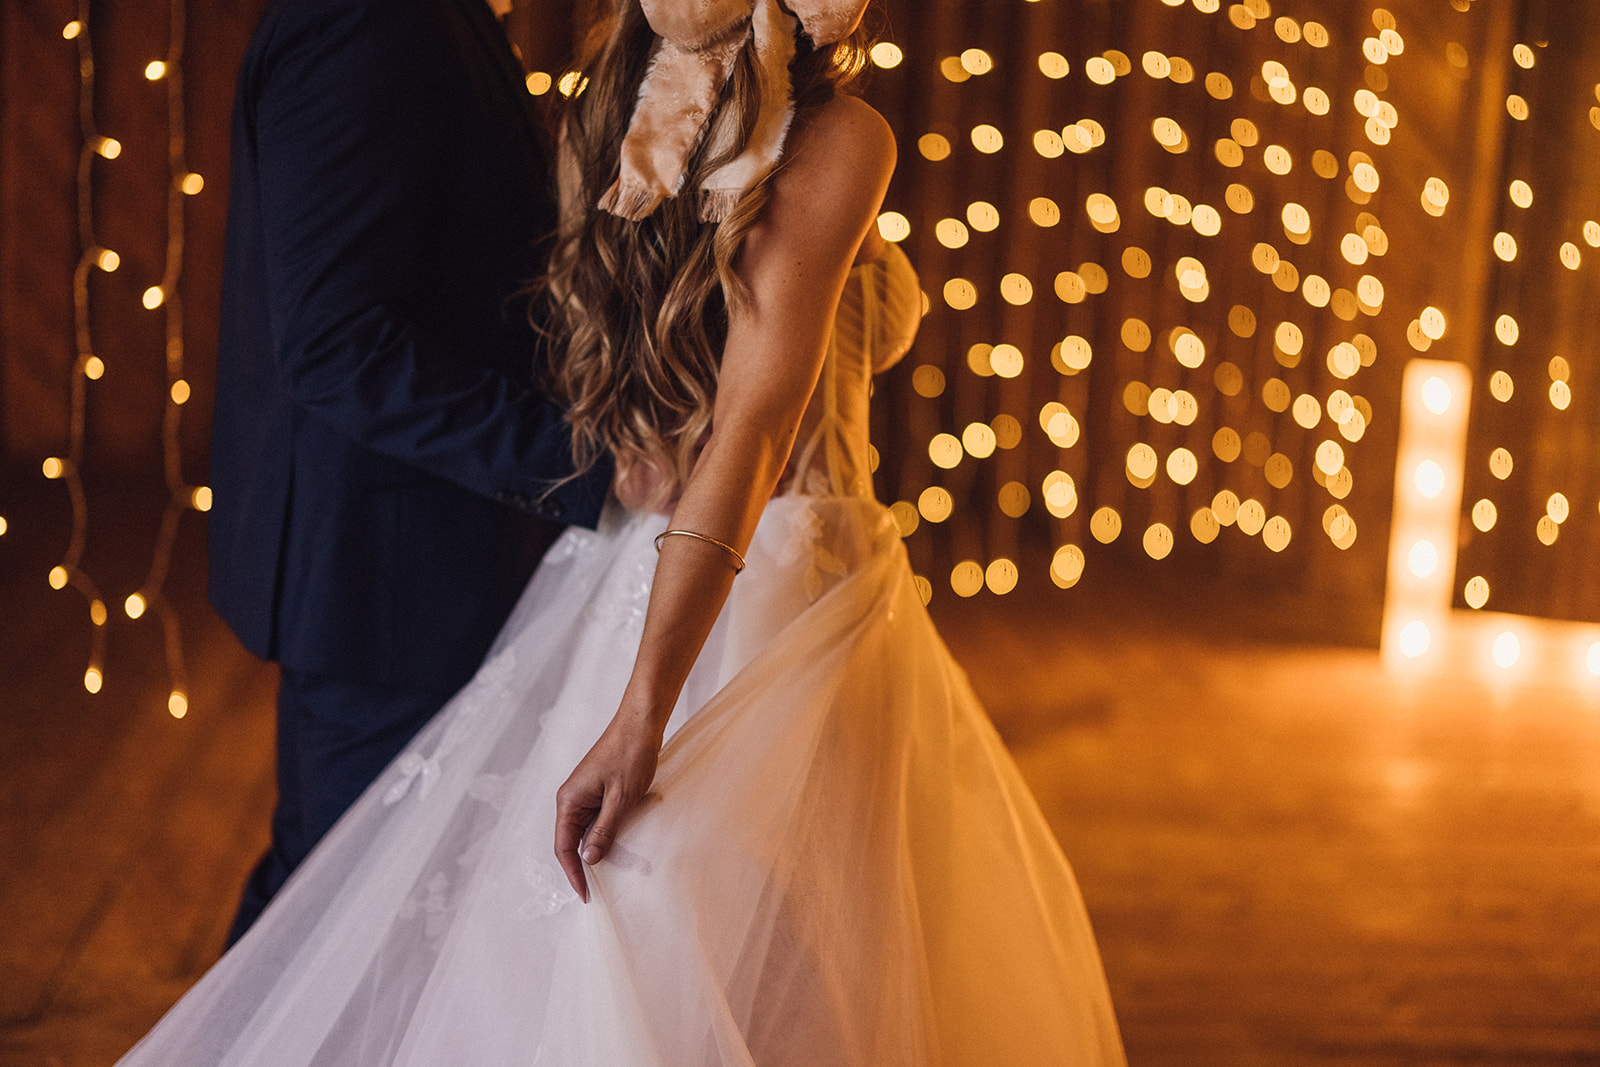 Twinkle lights in a barn wedding inspiration